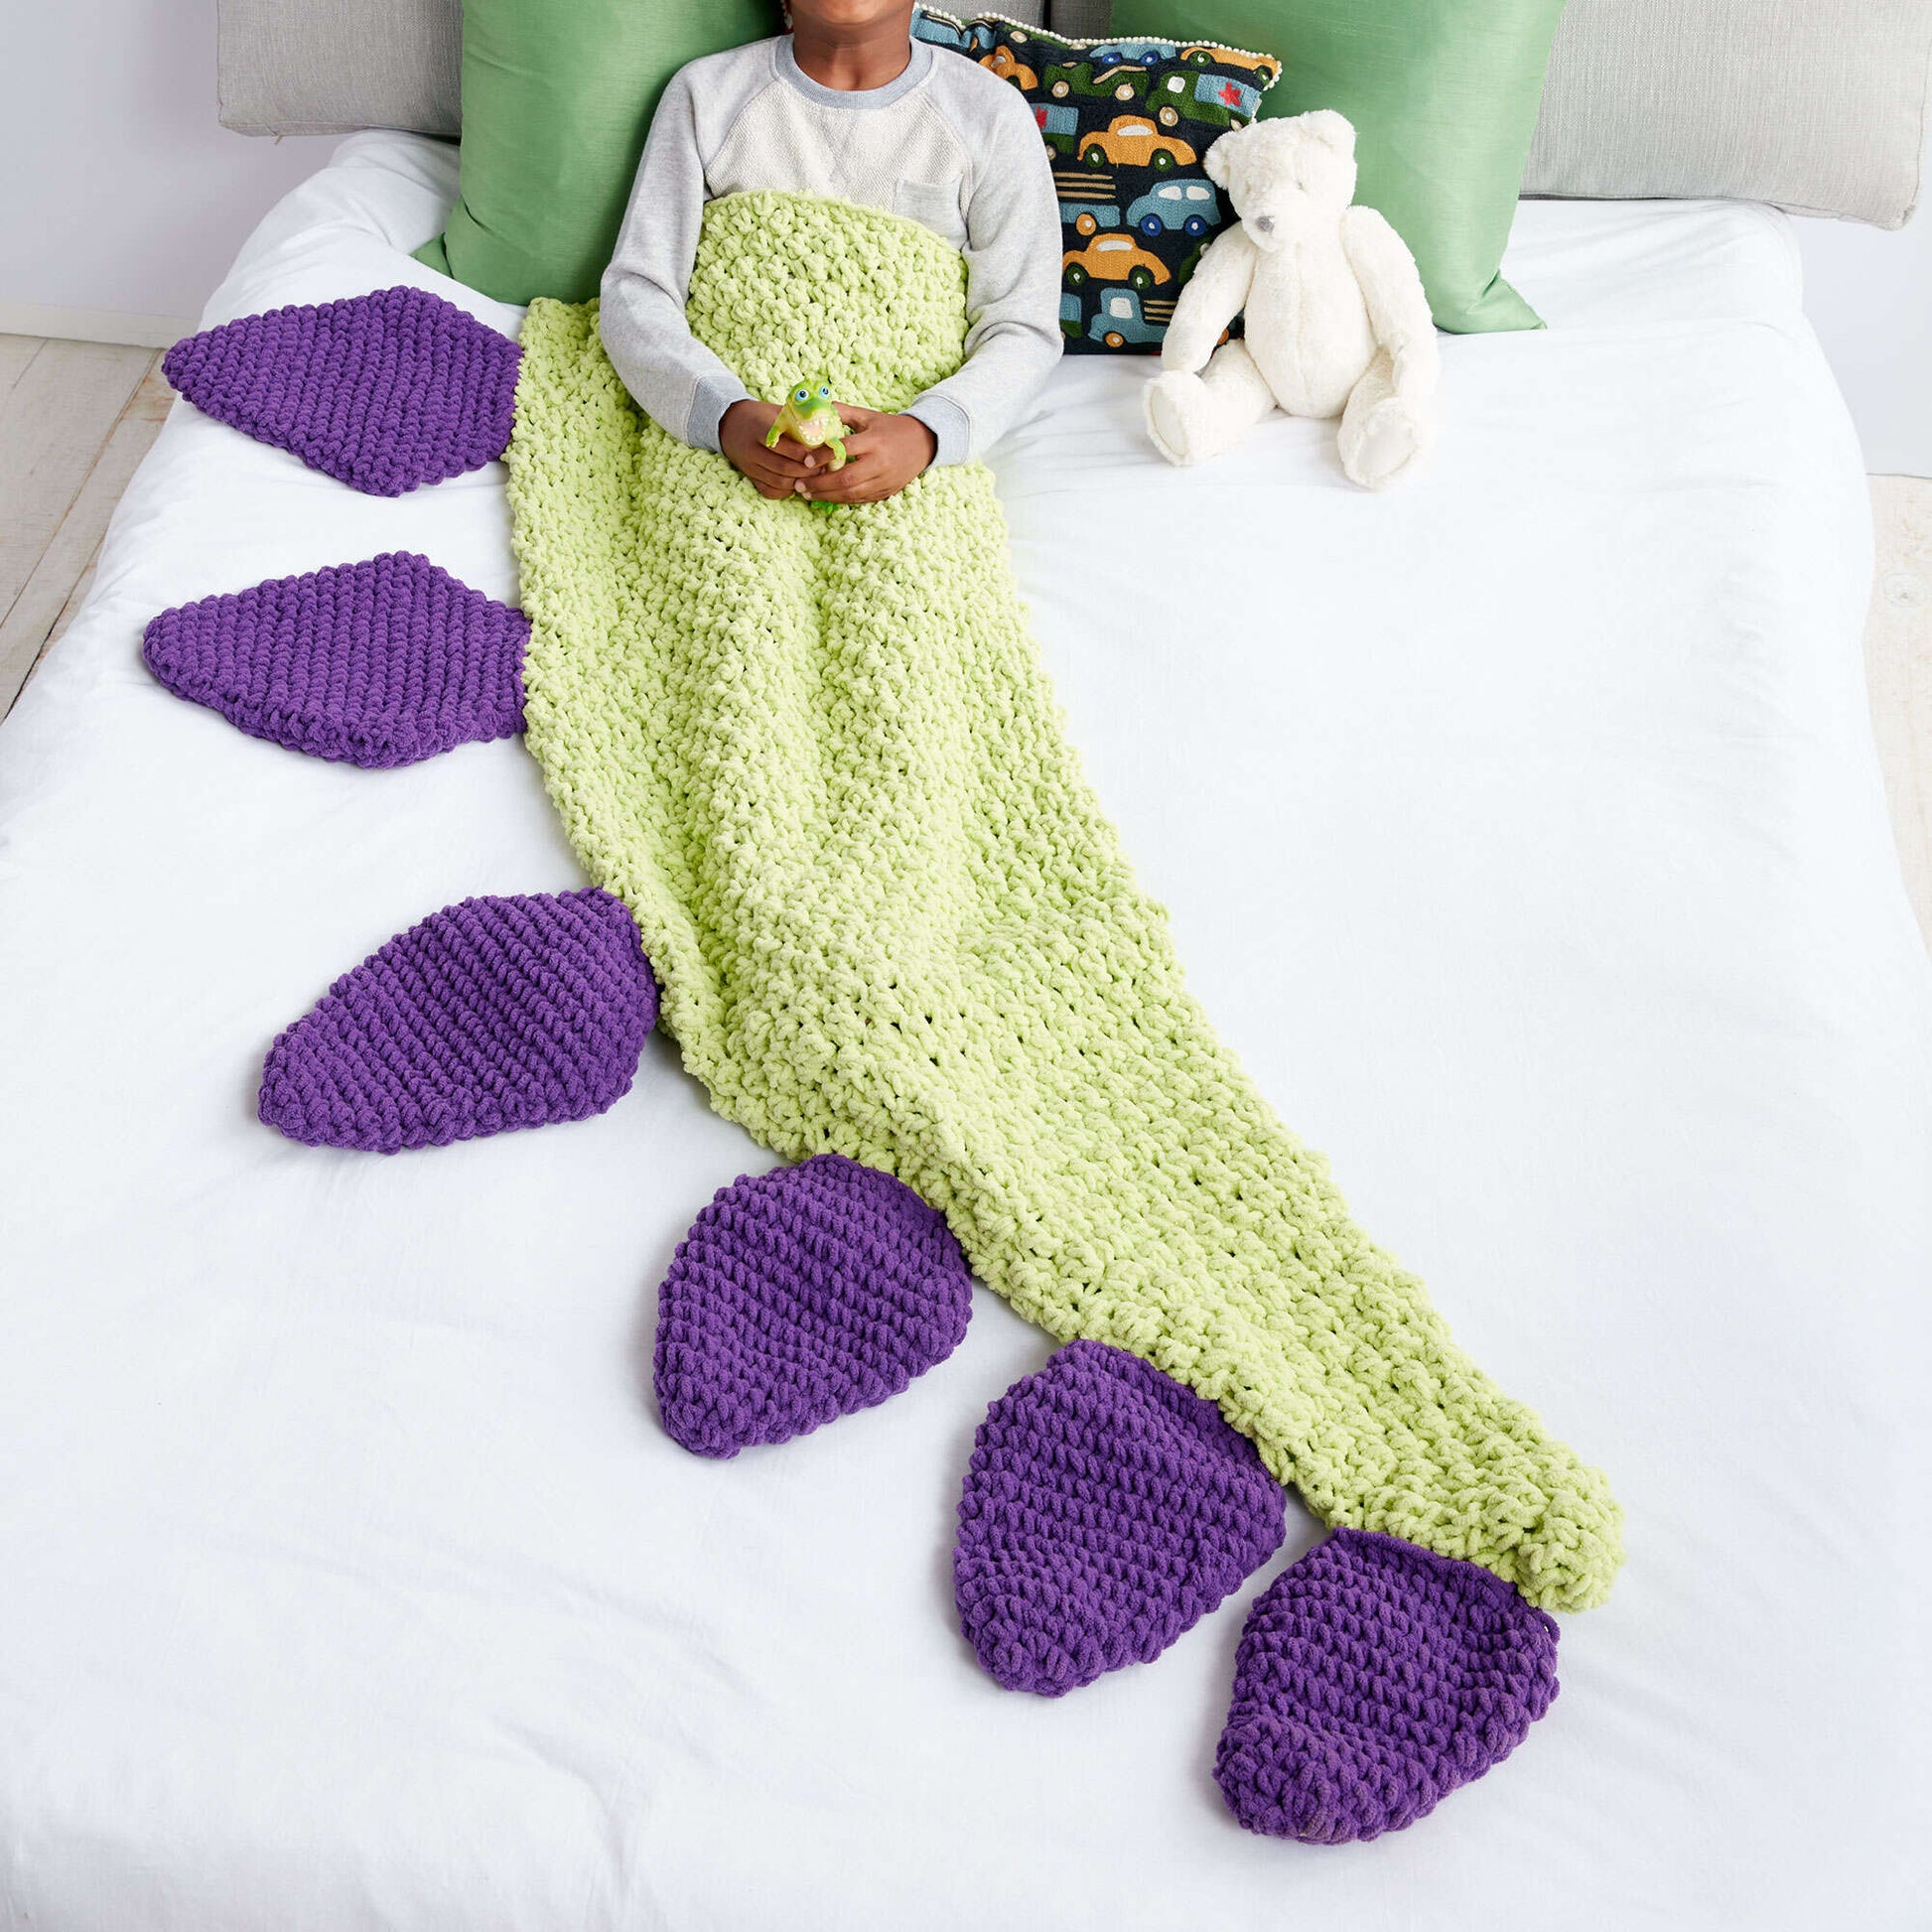 Bernat Dino Tail Crochet Snuggle Sack Crochet Blanket made in Bernat Baby Blanket yarn